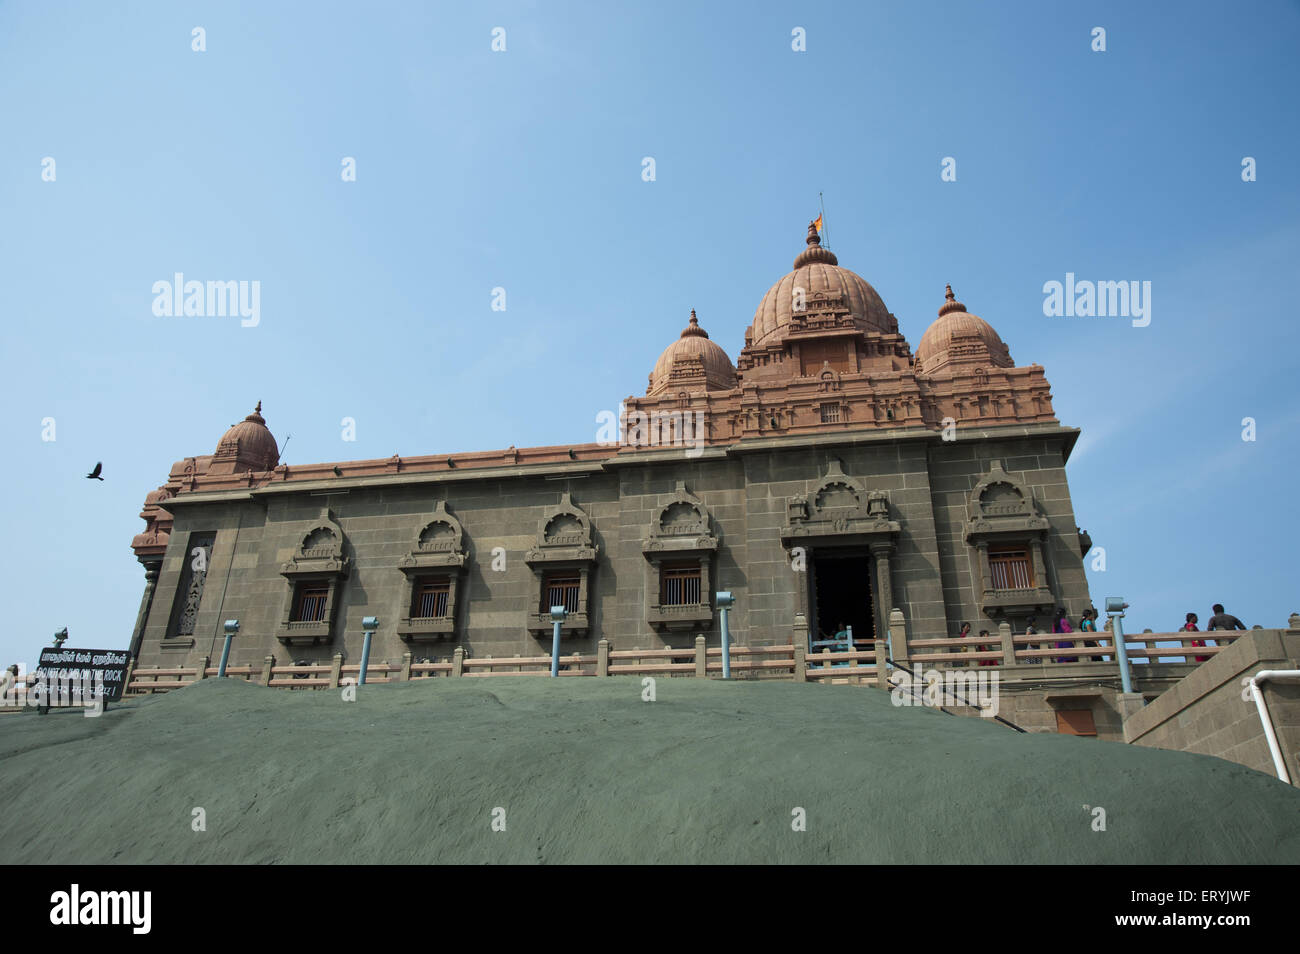 Swami Vivekananda Memorial Rock à Kanyakumari tamilnadu Inde Banque D'Images